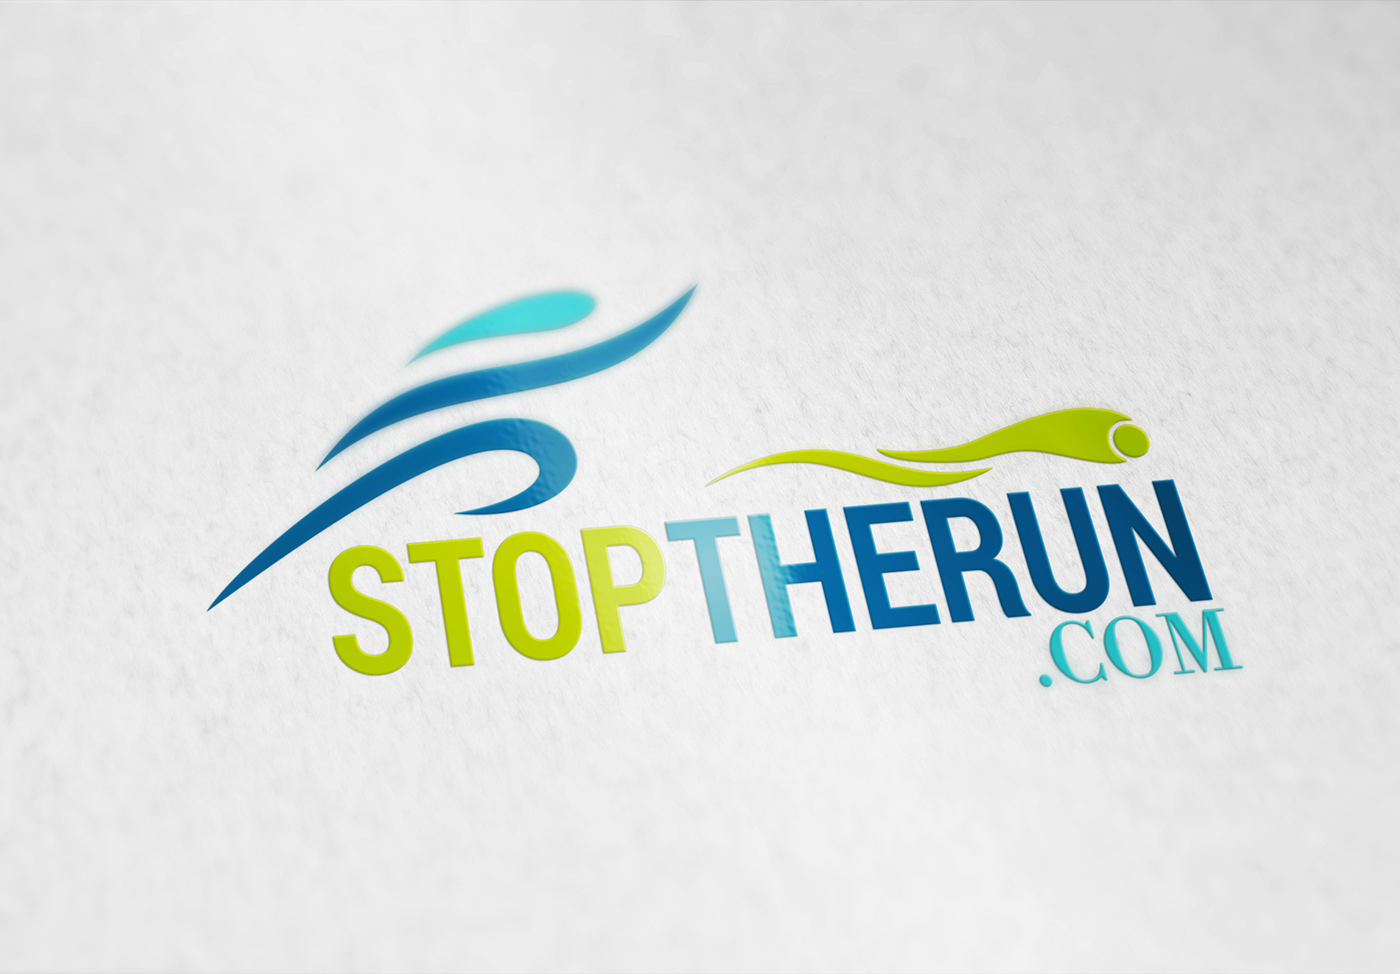 sports logo stop run stoptherun.com professional design branding  ILLUSTRATION 